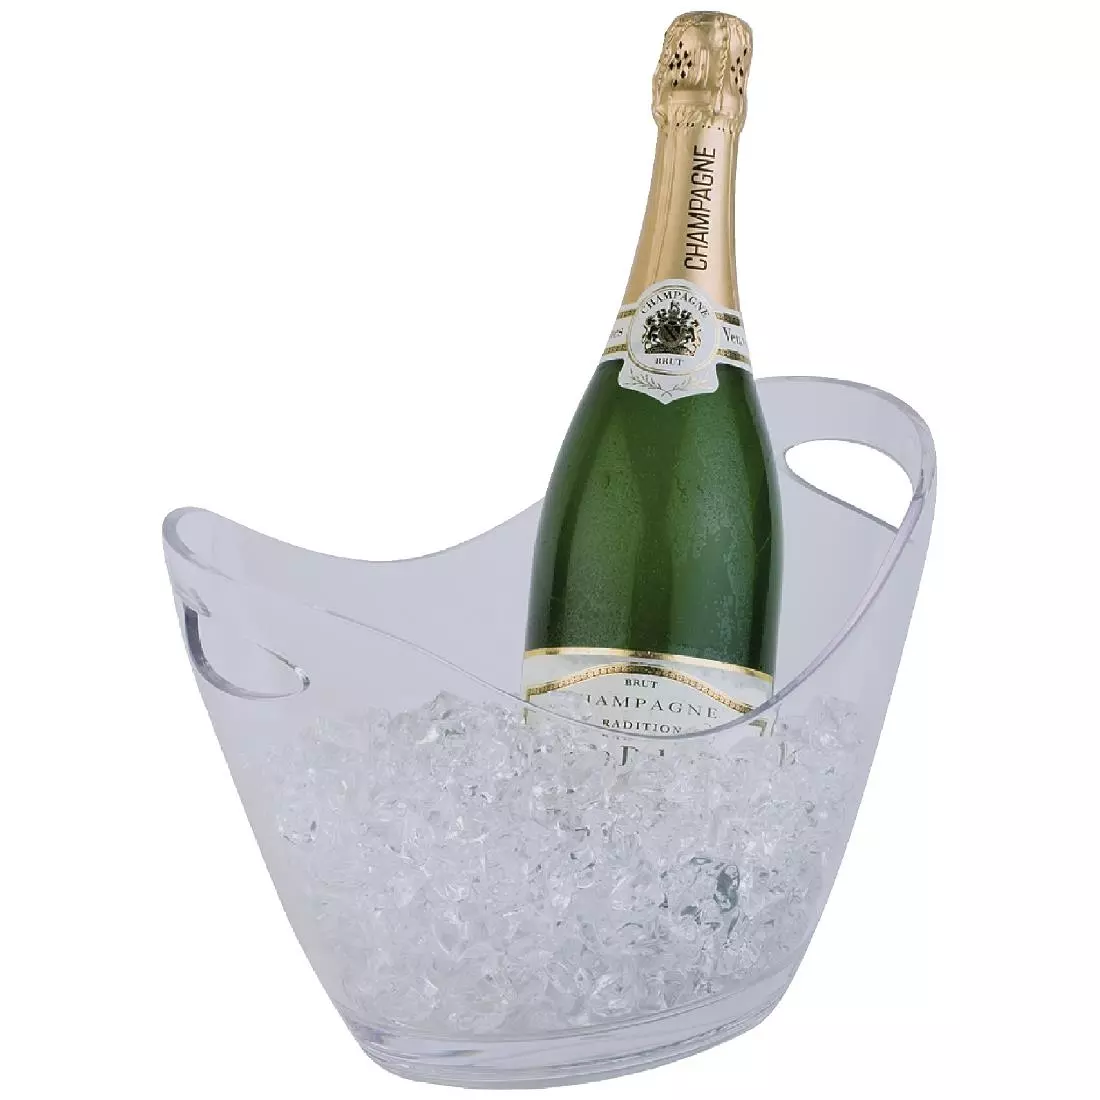 Een APS acryl champagne bowl klein transparant koop je bij ShopXPress